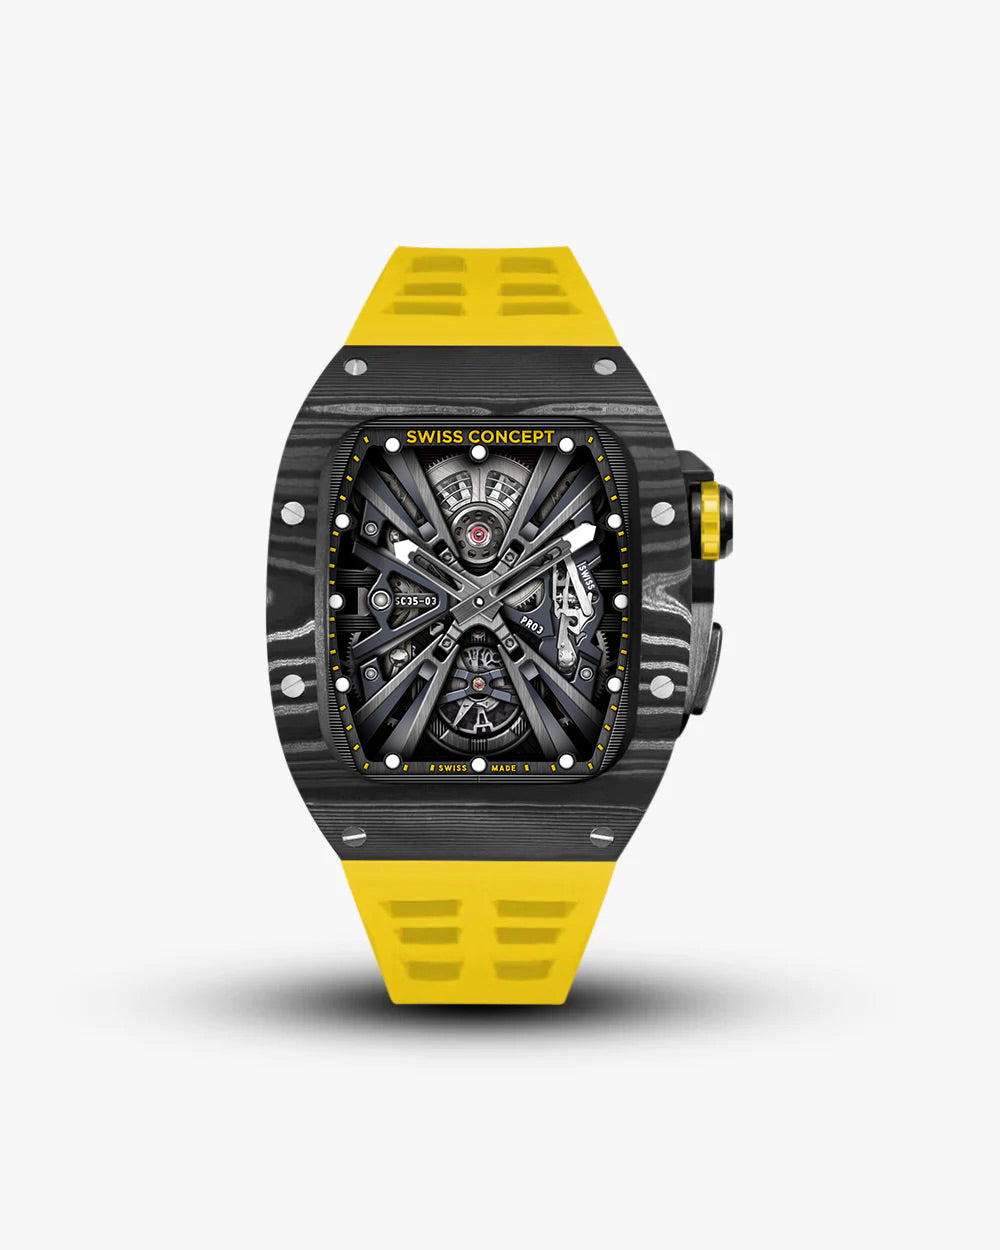 Swiss Concept Racing Elite Edition Nero Forged Carbon, Matte Black & Modena Yellow Apple Watch Case - Swiss Design